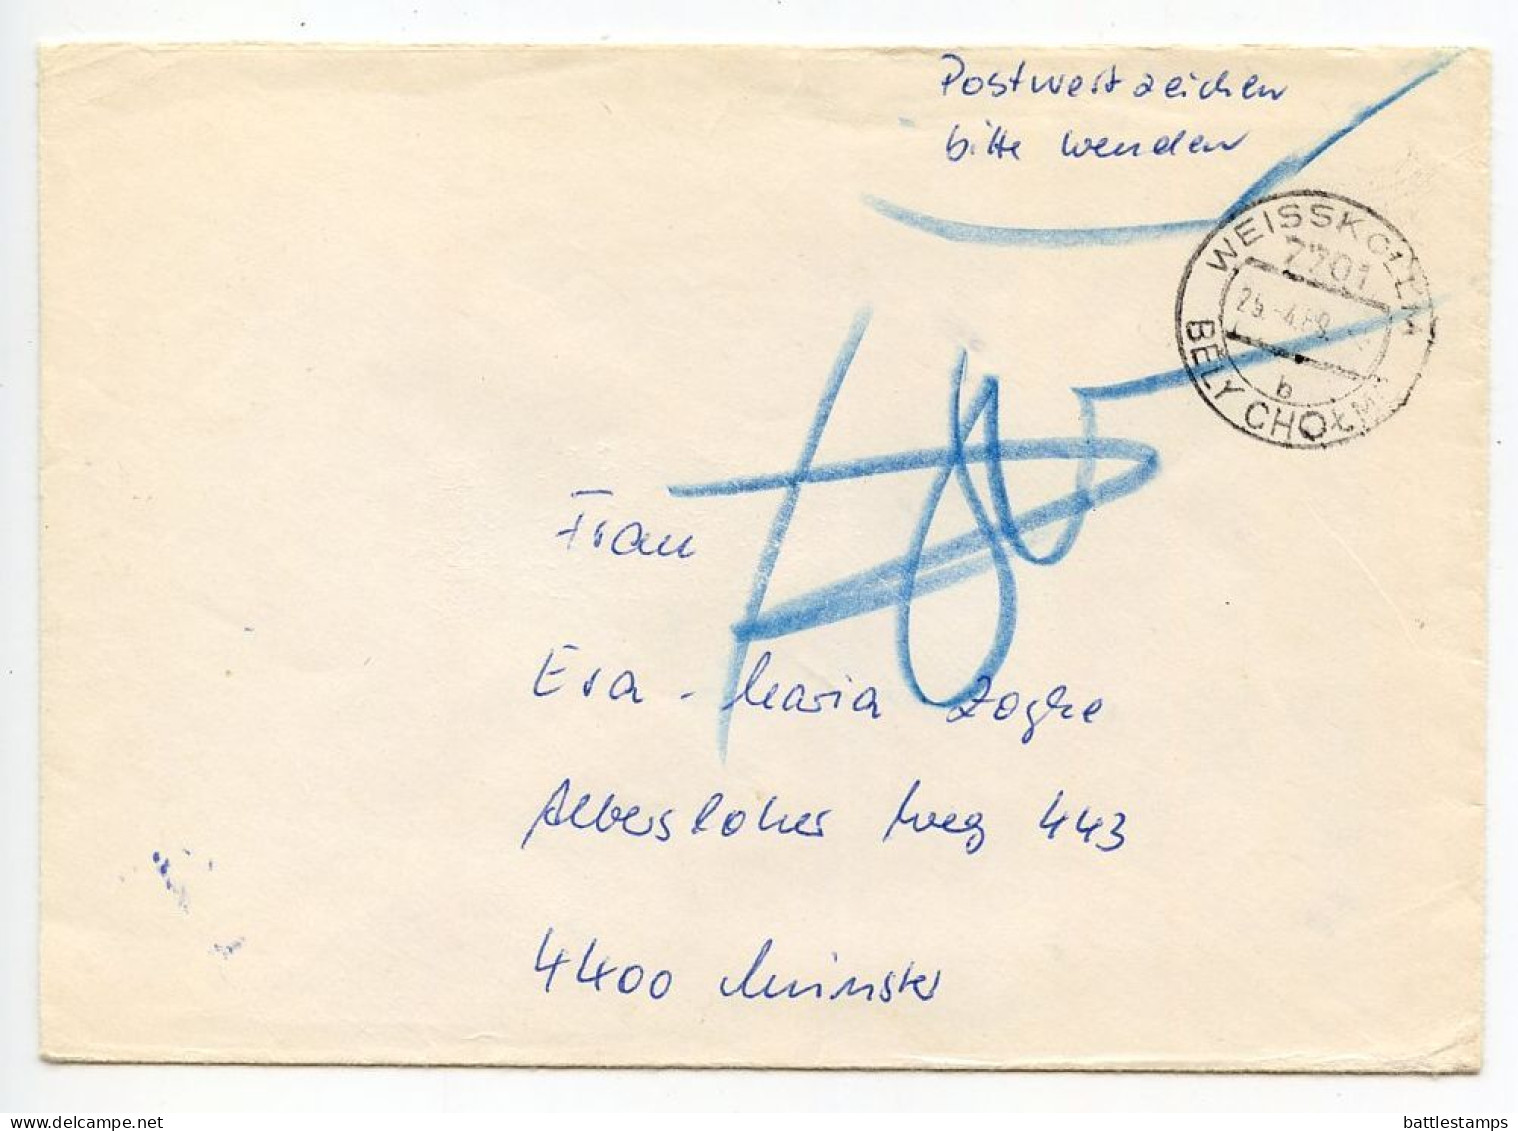 Germany, East 1989 Cover; Weisskollm / Běły Chołmc Postmarks; 11.10m Thomas Munzter Souvenir Sheet - Cartas & Documentos